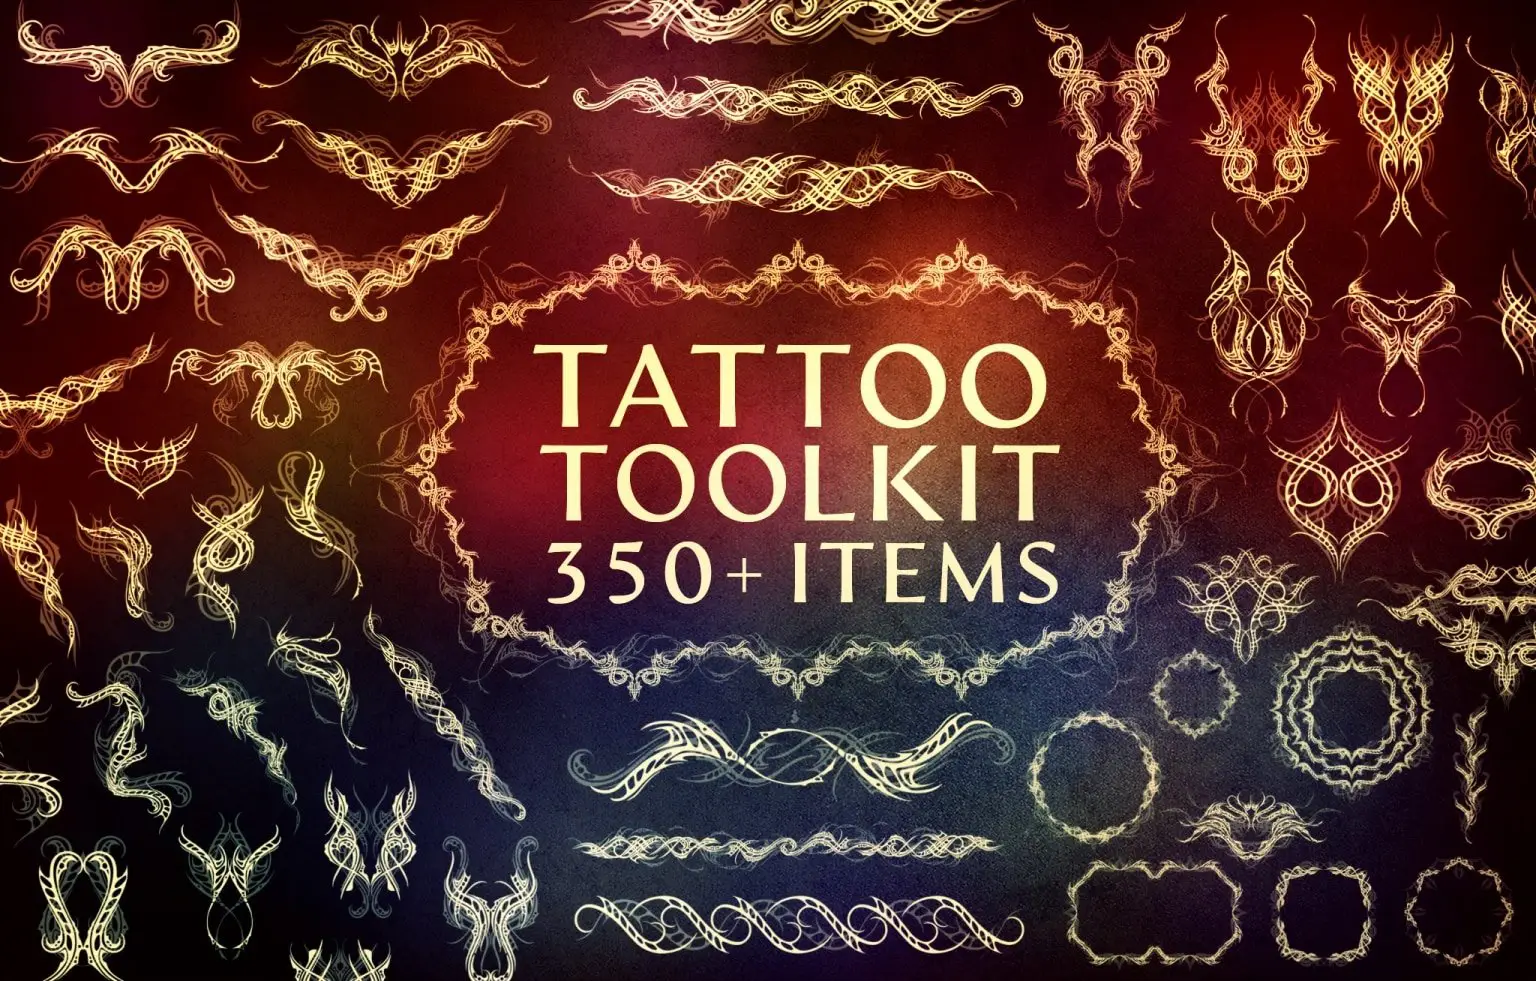 20+ Tattoo Design Books